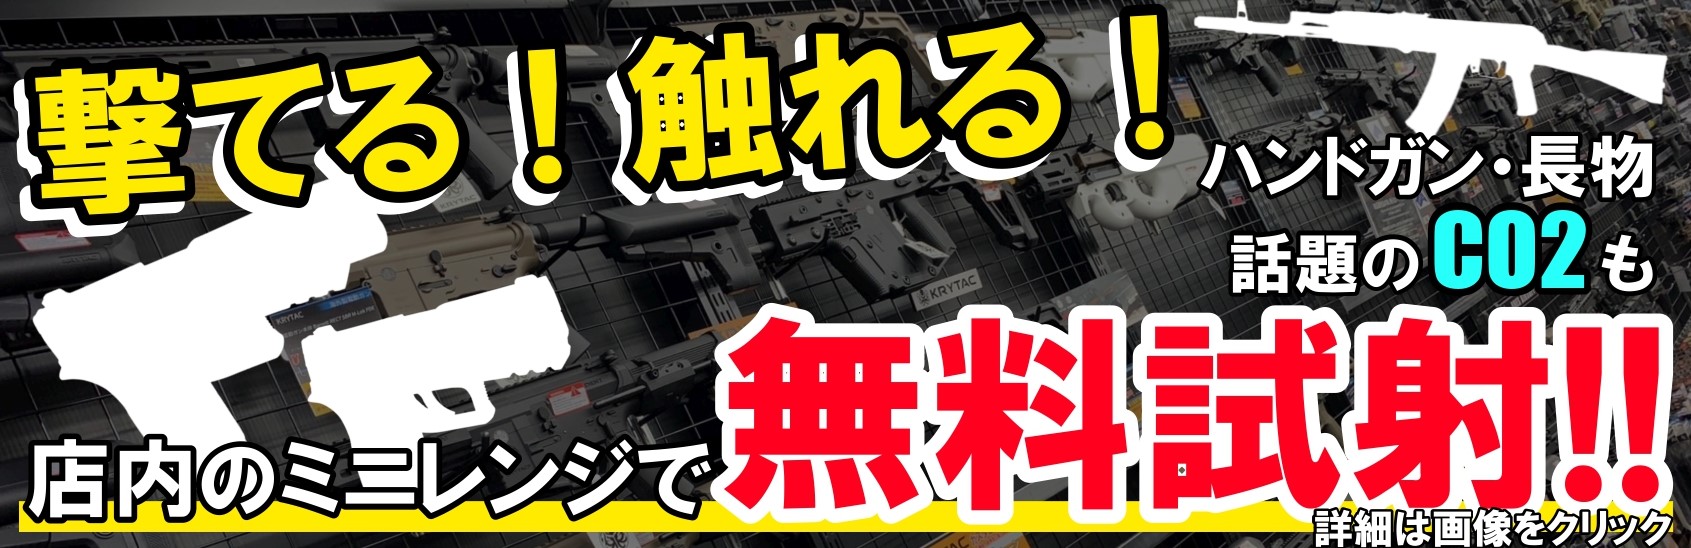 HOT格安6847】 東京マルイ製 MP5 SD6 スタンダード電動ガン 電動ガン